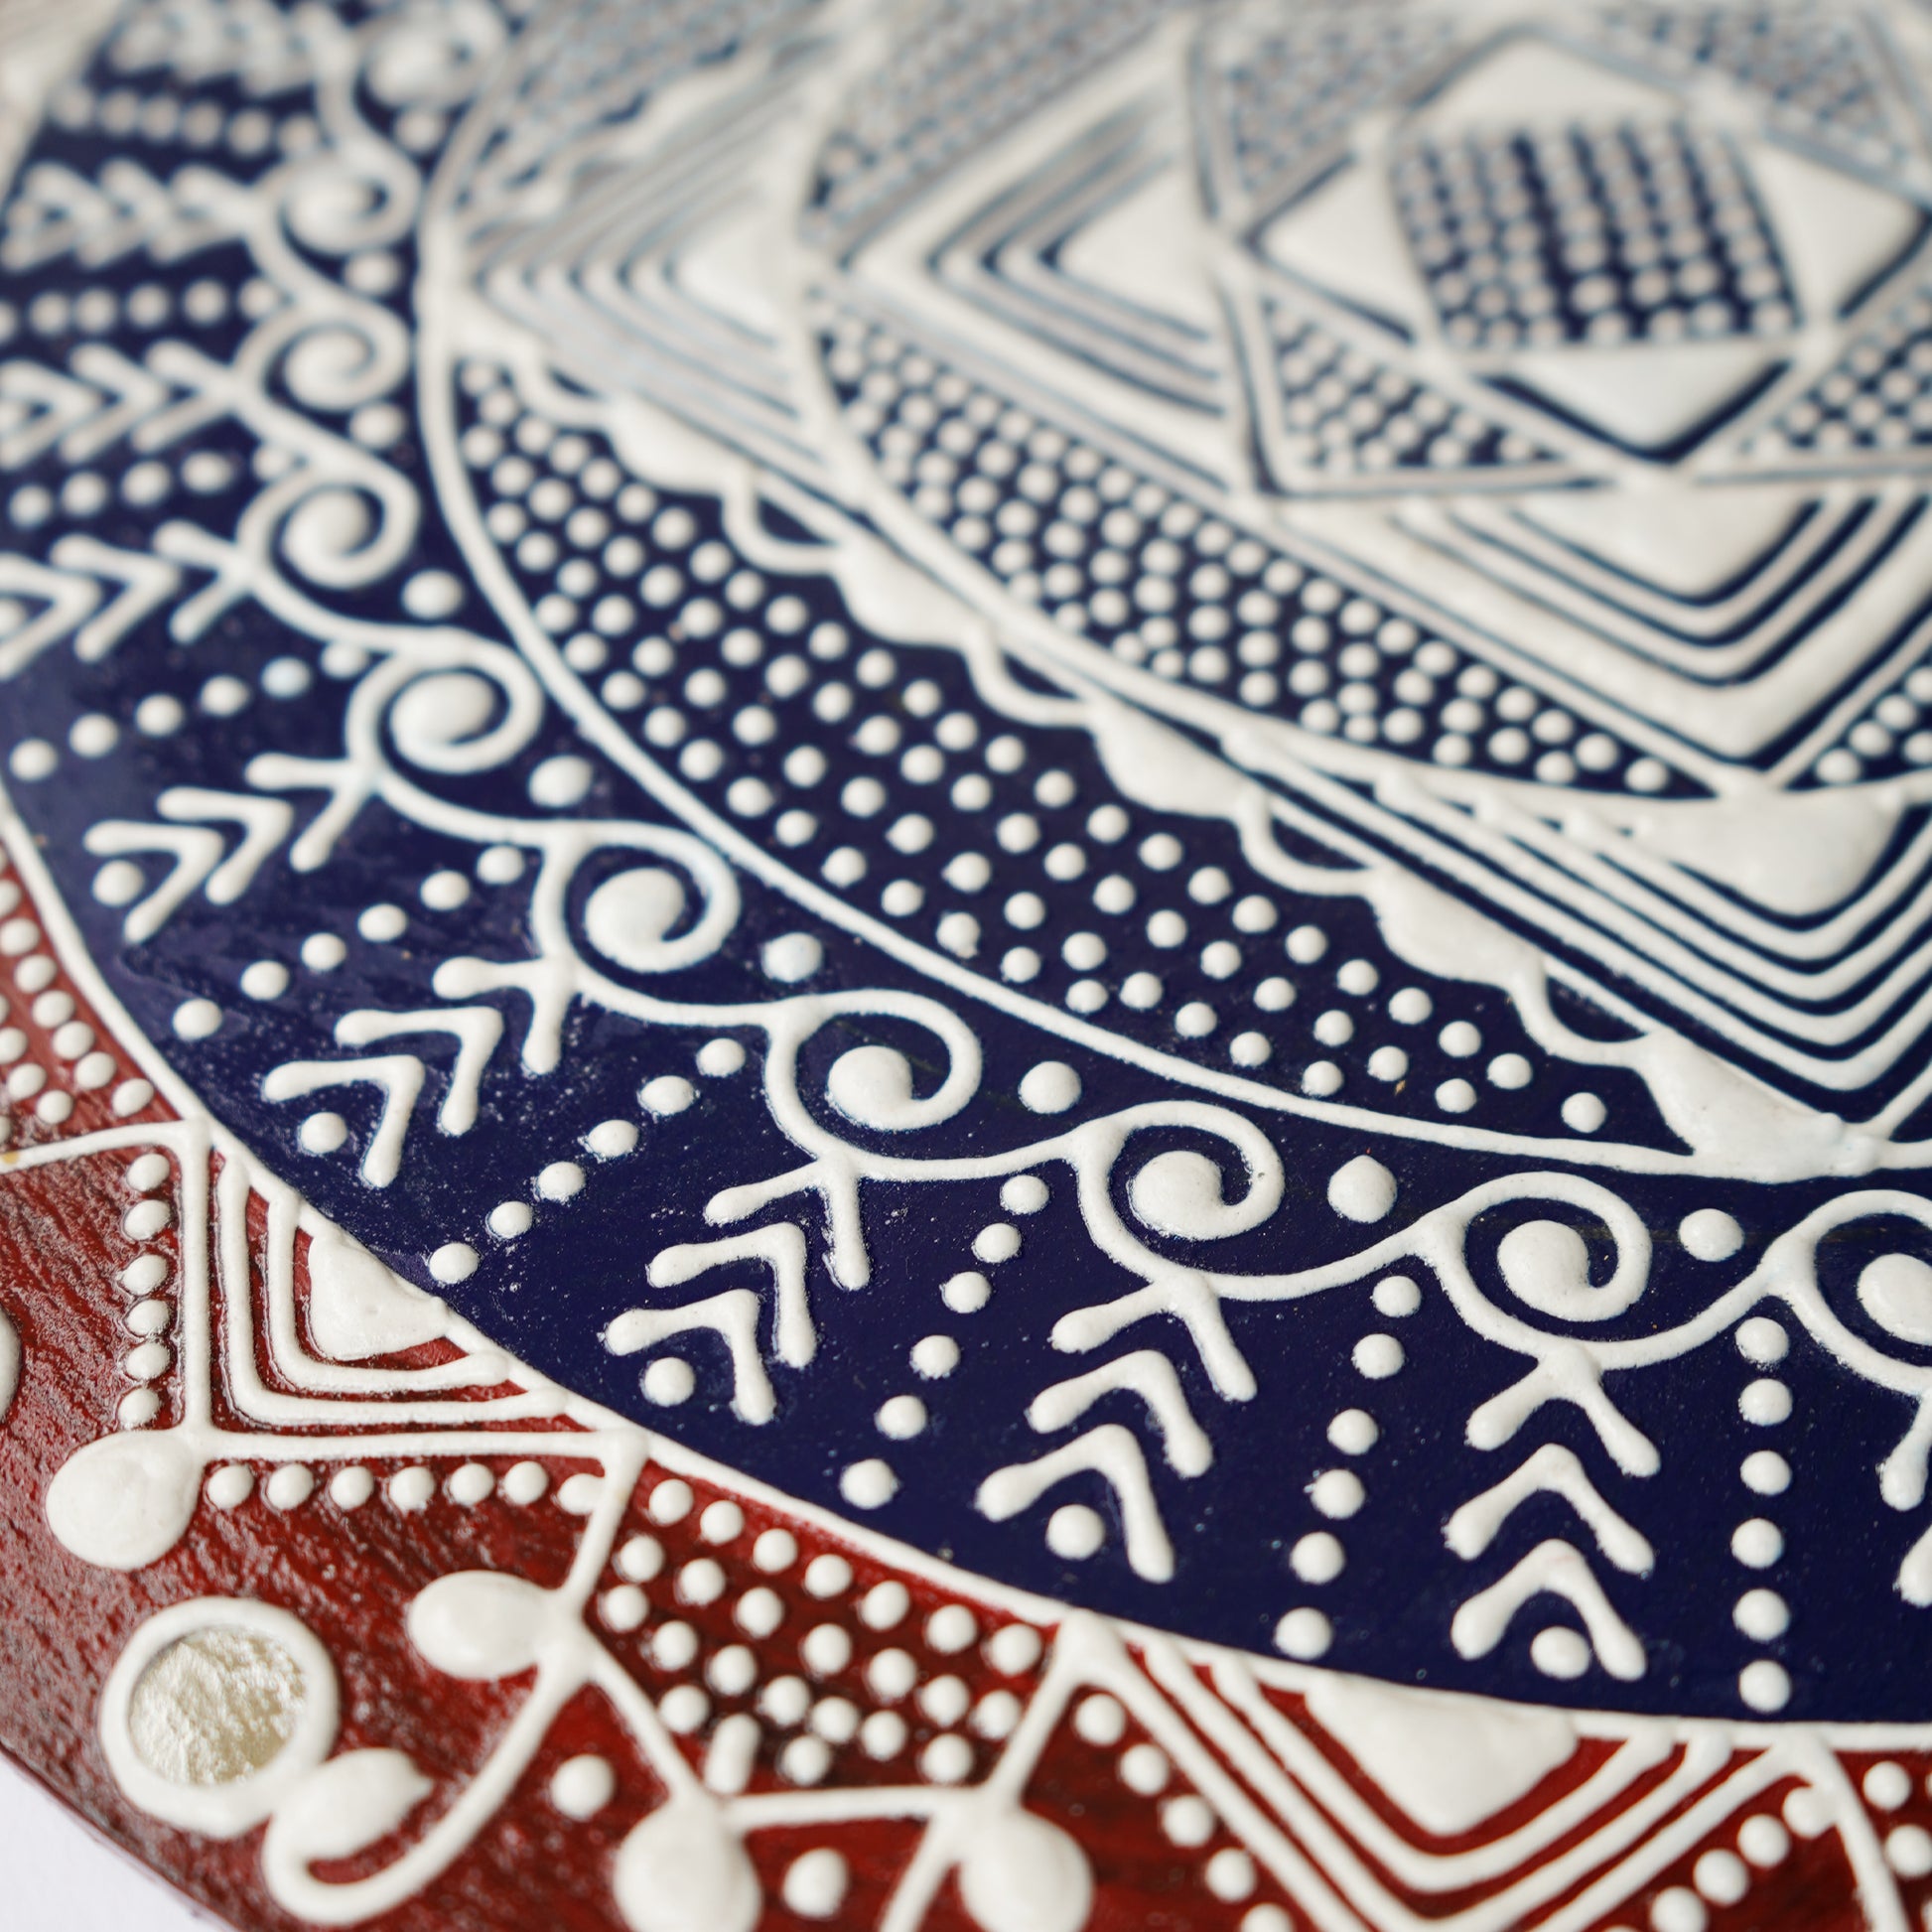 Mandana Wall Art: Geometric Pattern priced at Rs. 1,950.00